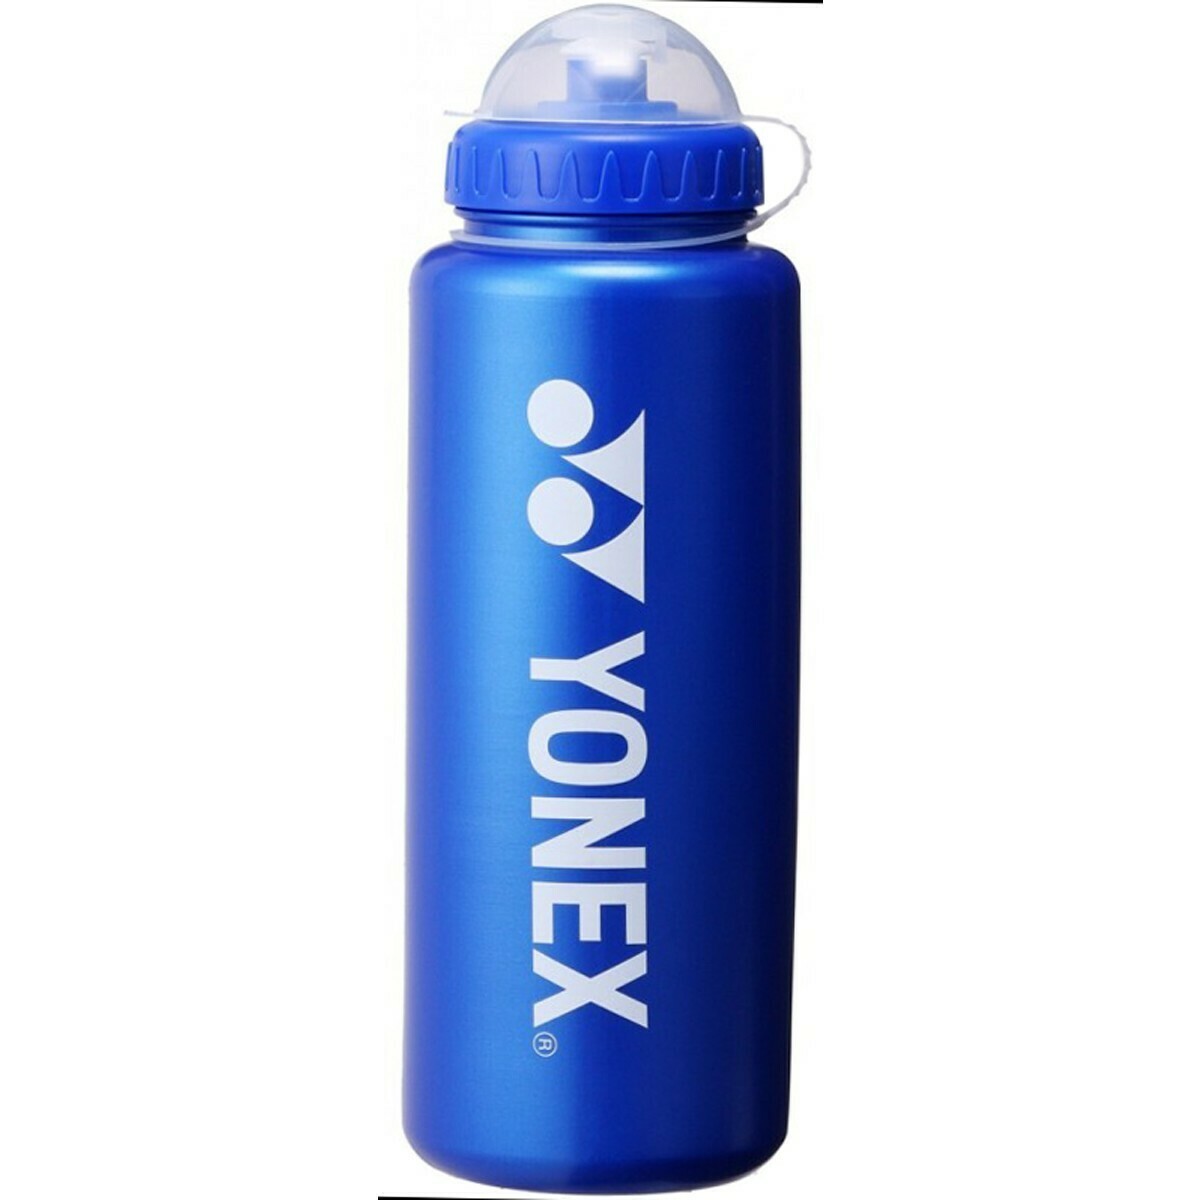 Yonex Water Bottle